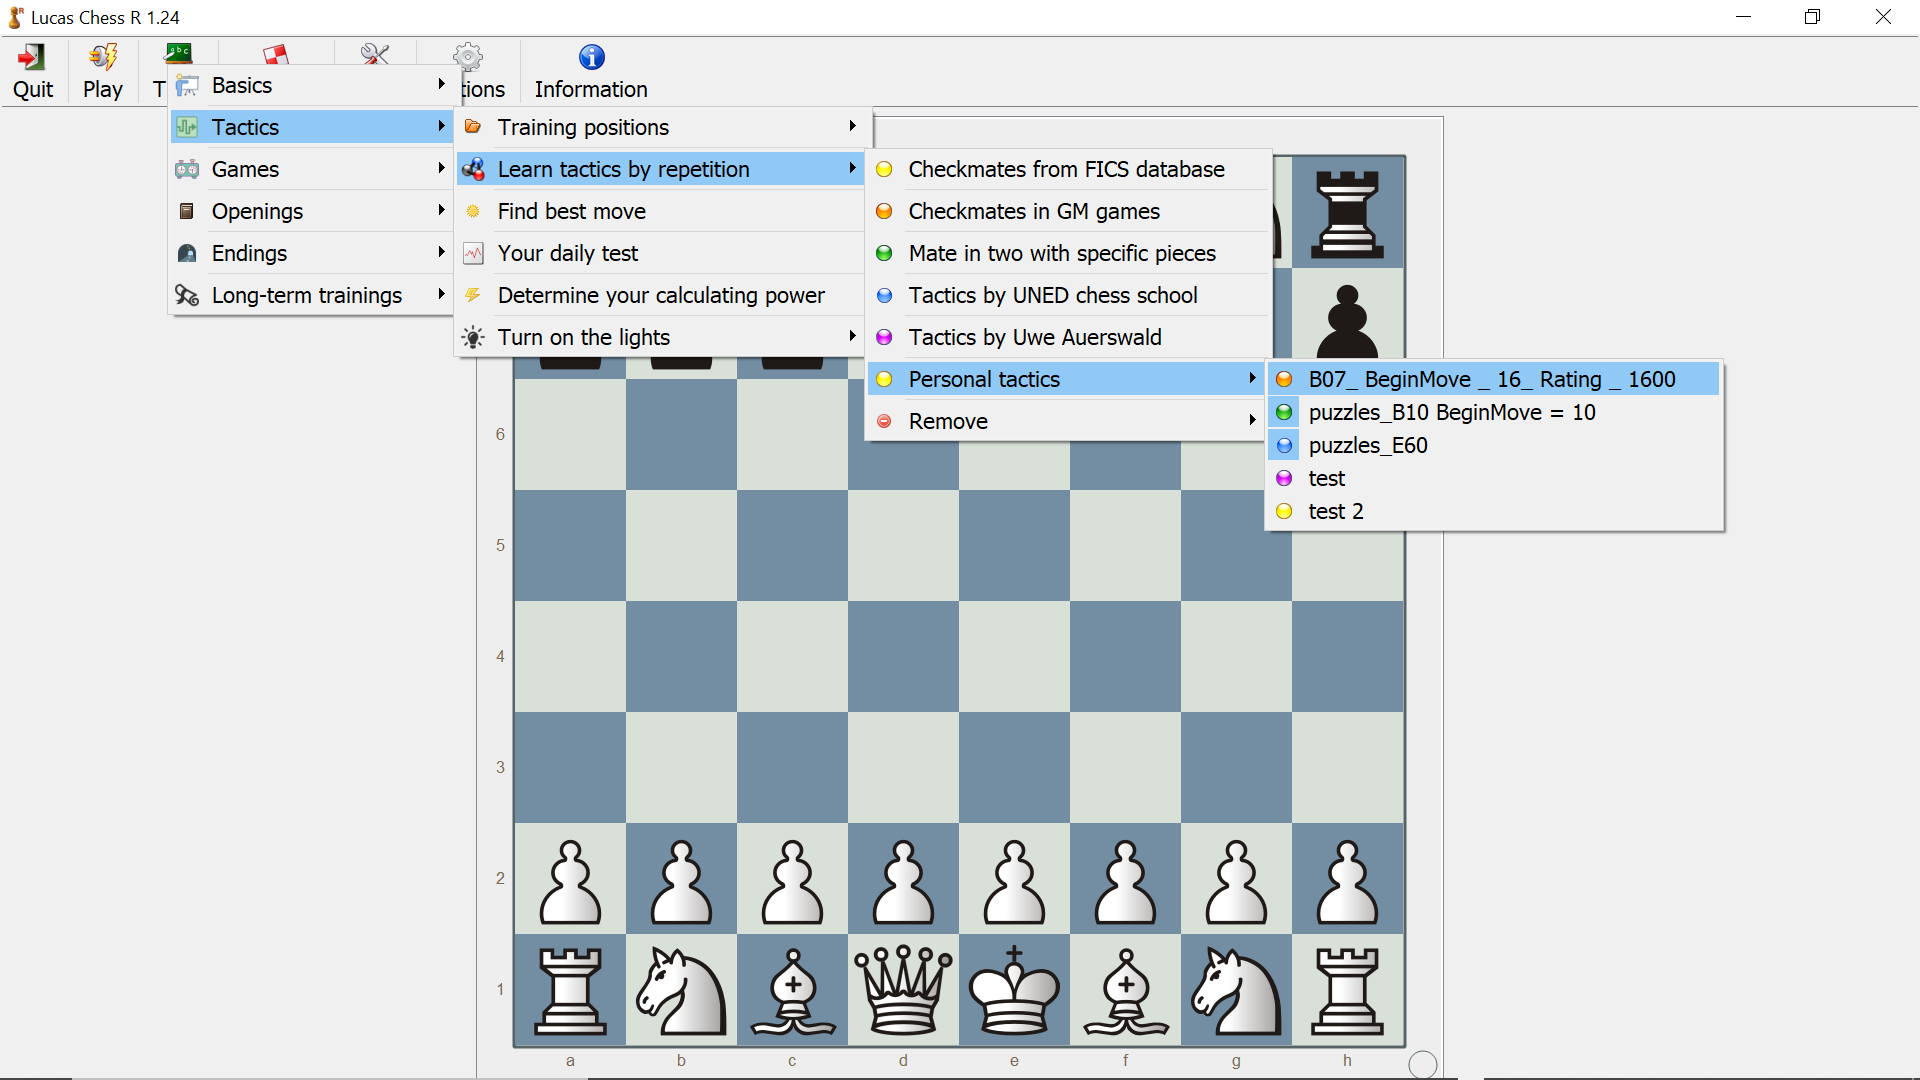 Alekhine's Defense: Mokele Mbembe Variation - Chess Openings 